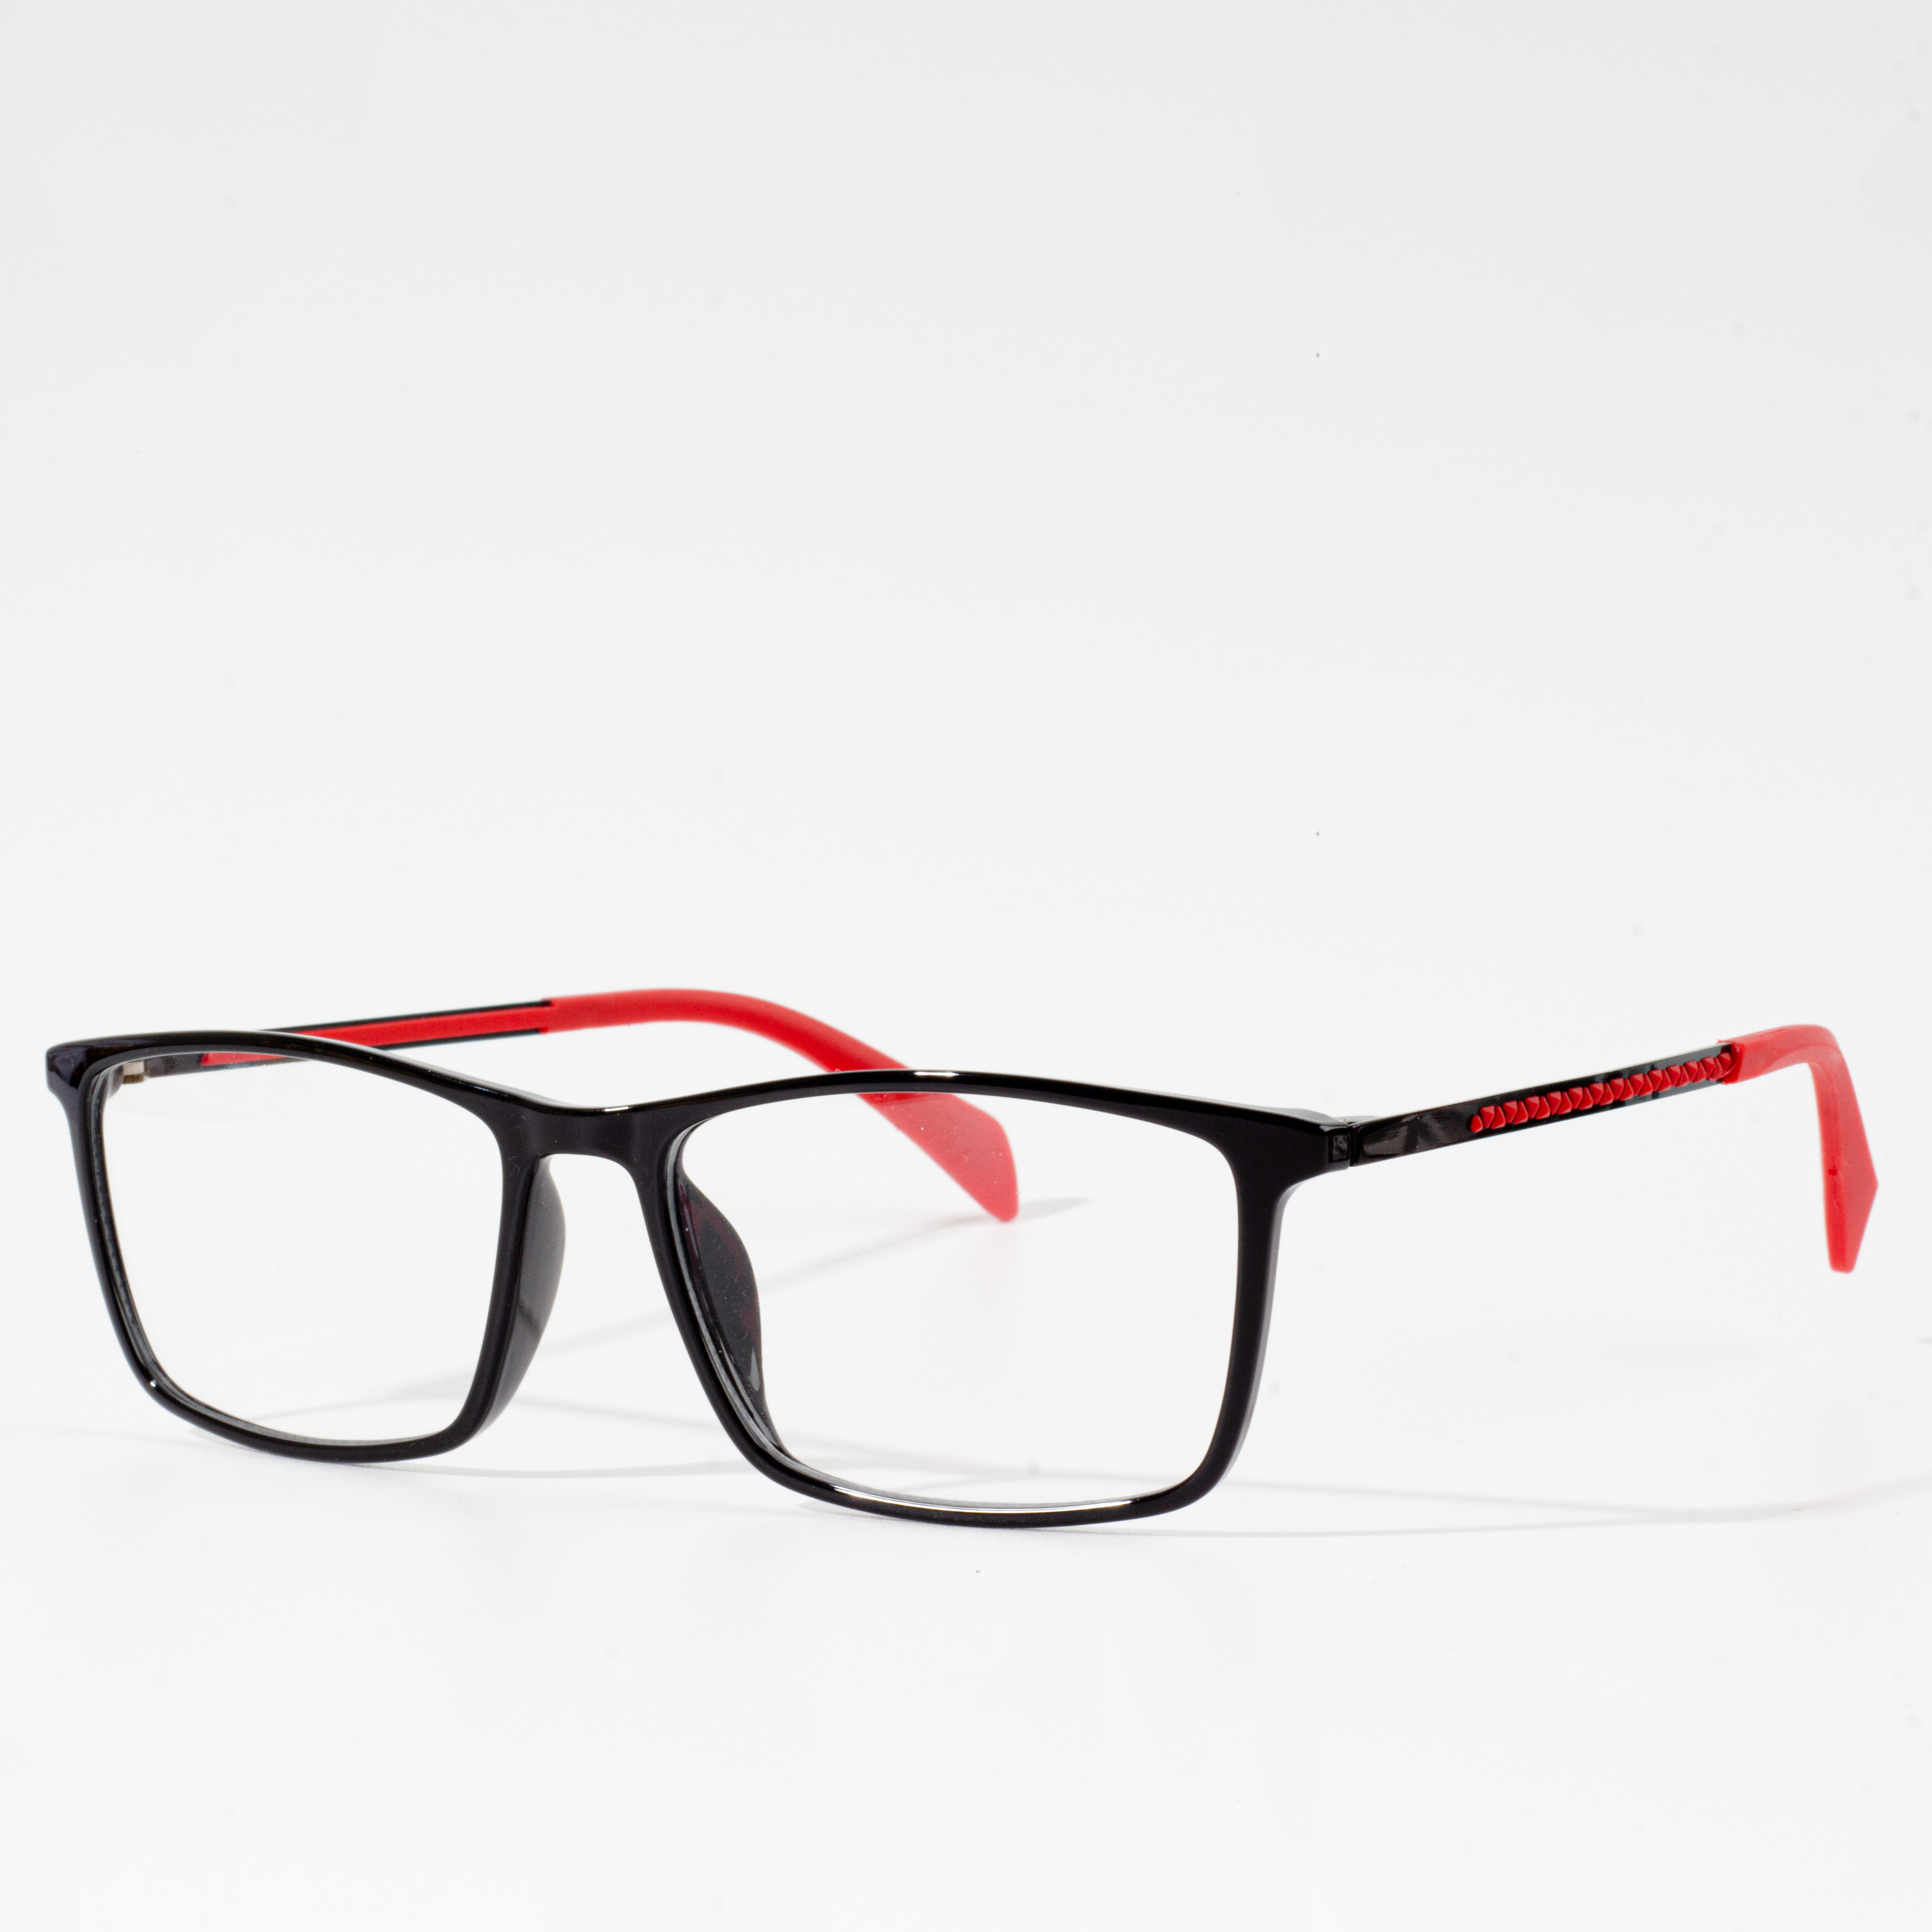  eyeglass frame